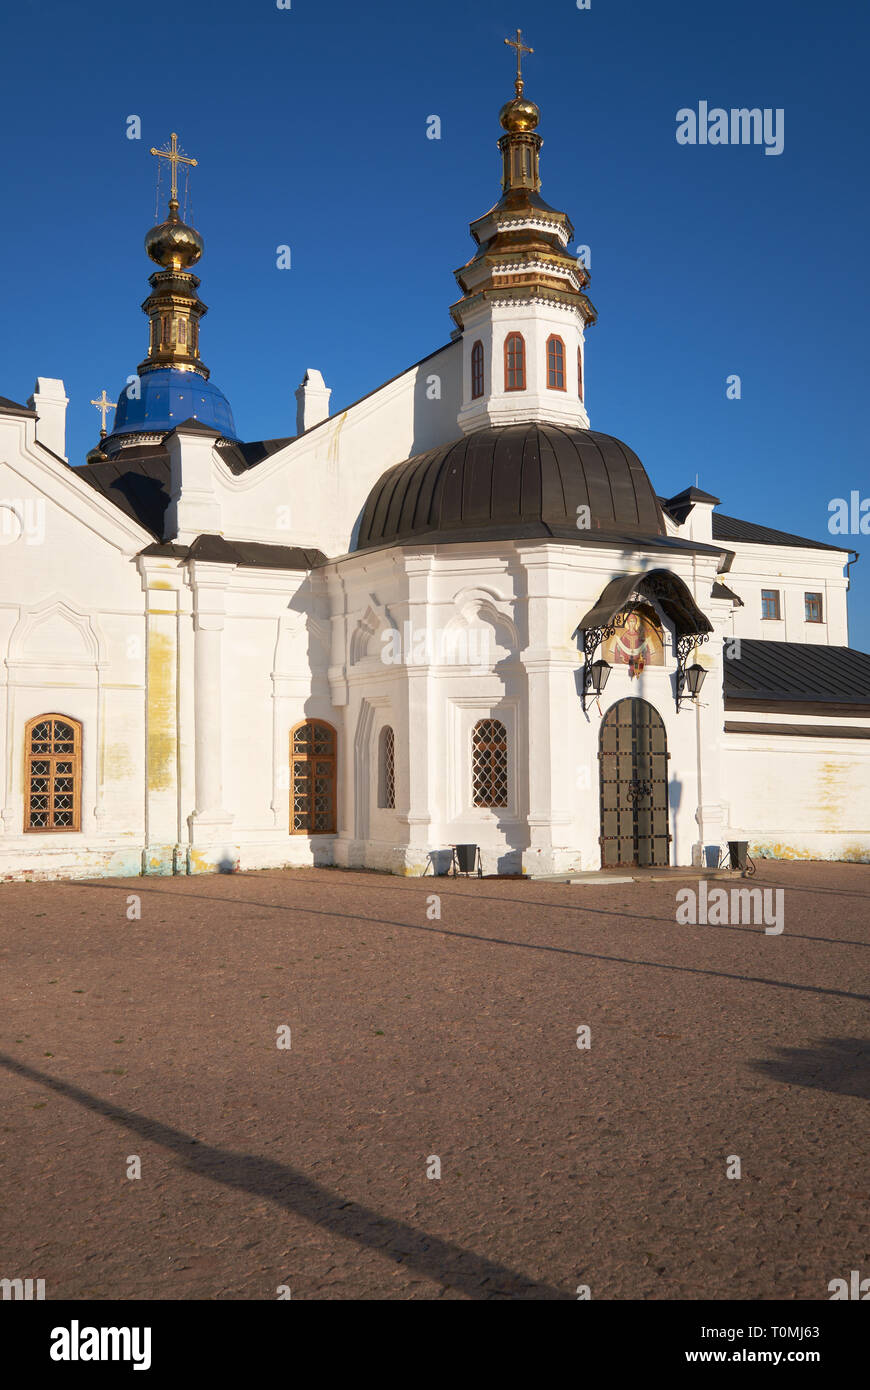 The view of the Baroque style Pokrovsky Winter Cathedral. Tobolsk Kremlin. Tobolsk. Russia Stock Photo